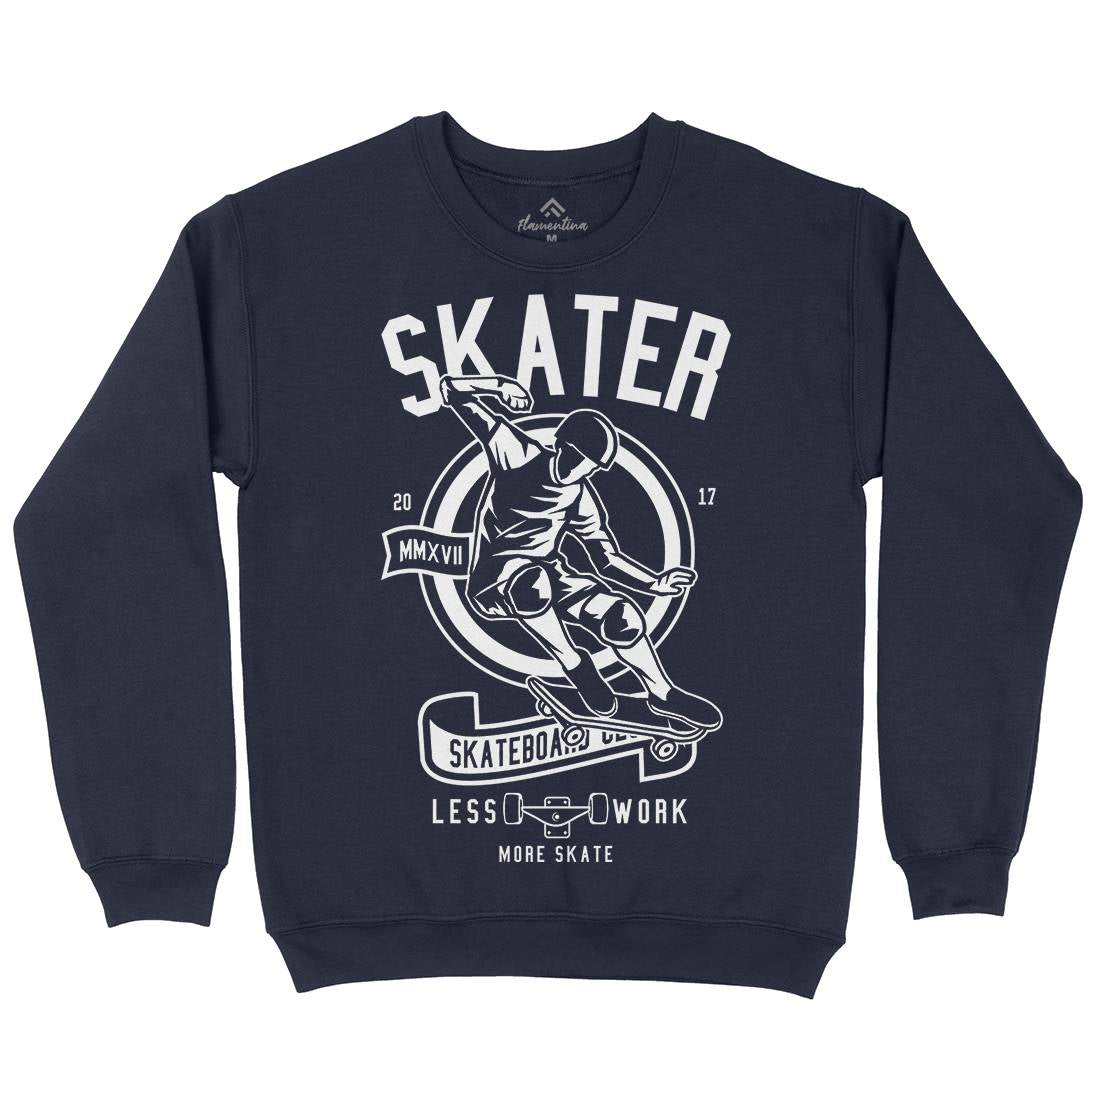 Skater Kids Crew Neck Sweatshirt Skate B625